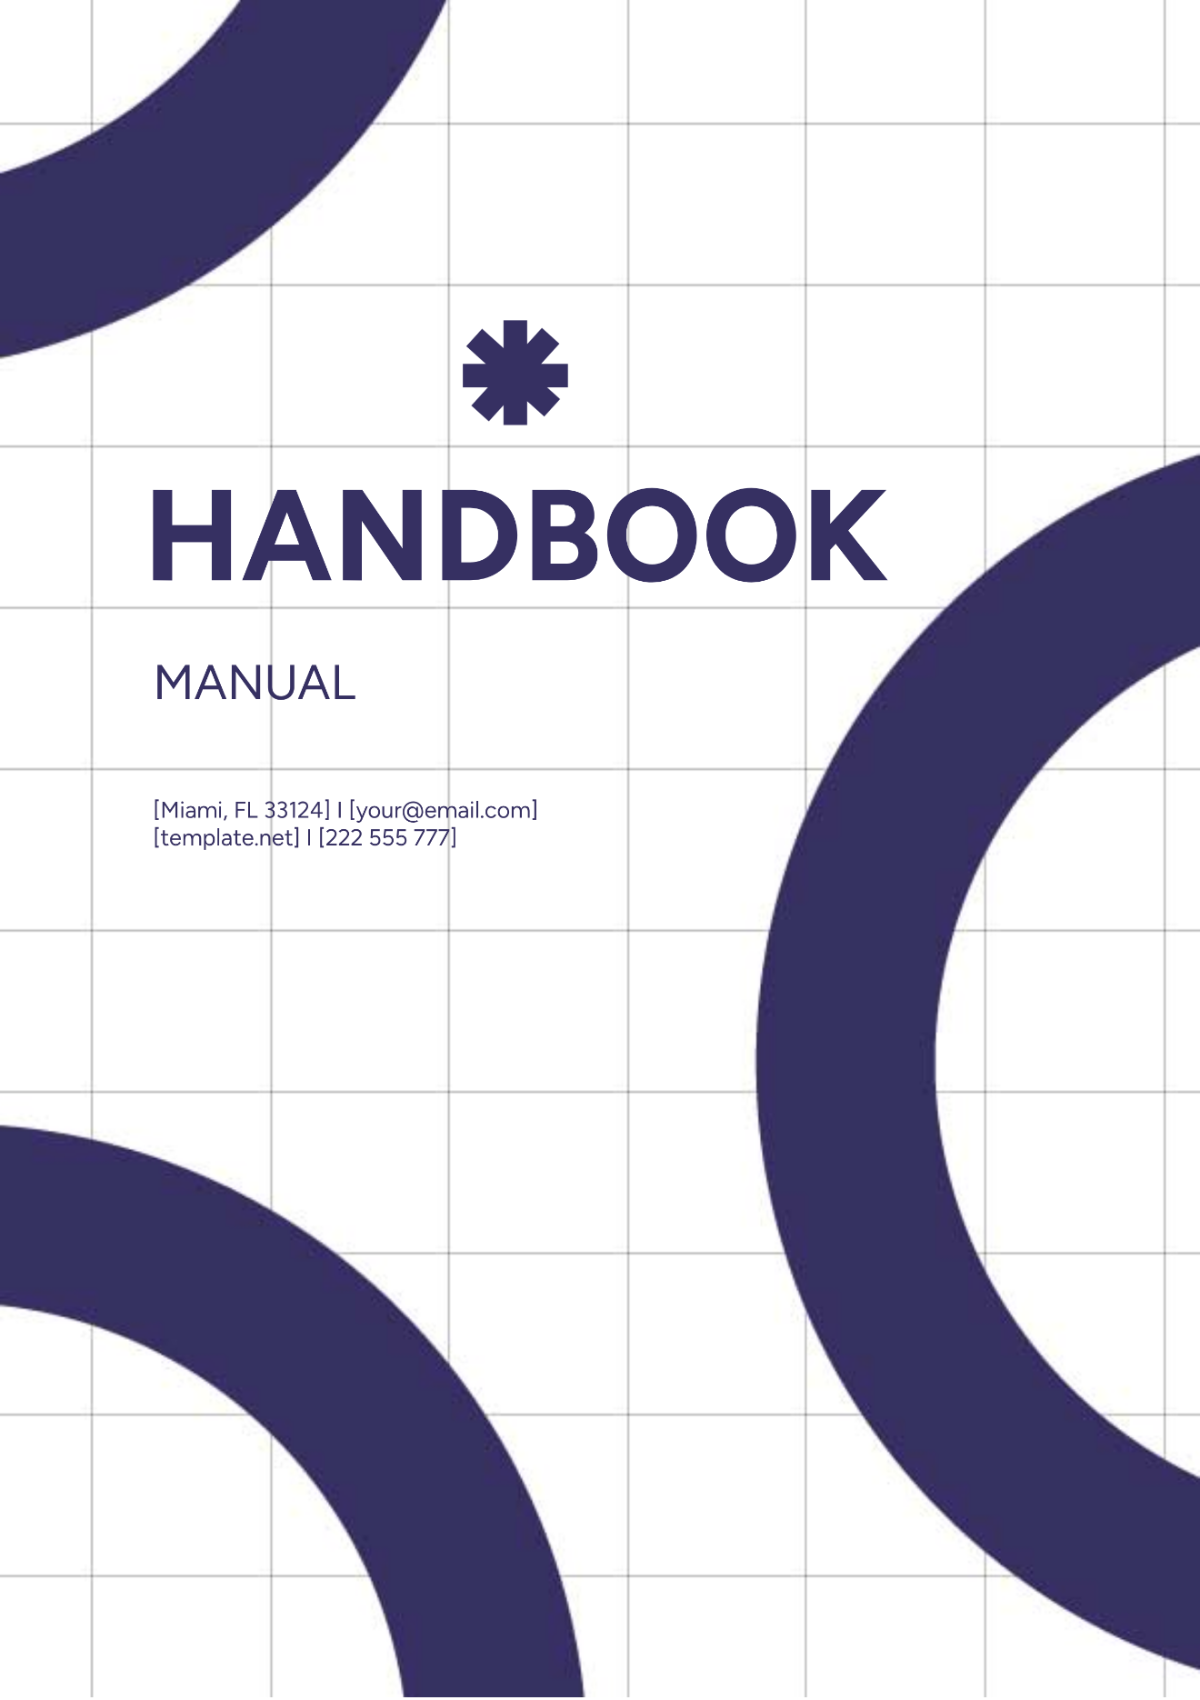 Handbook Manual Template